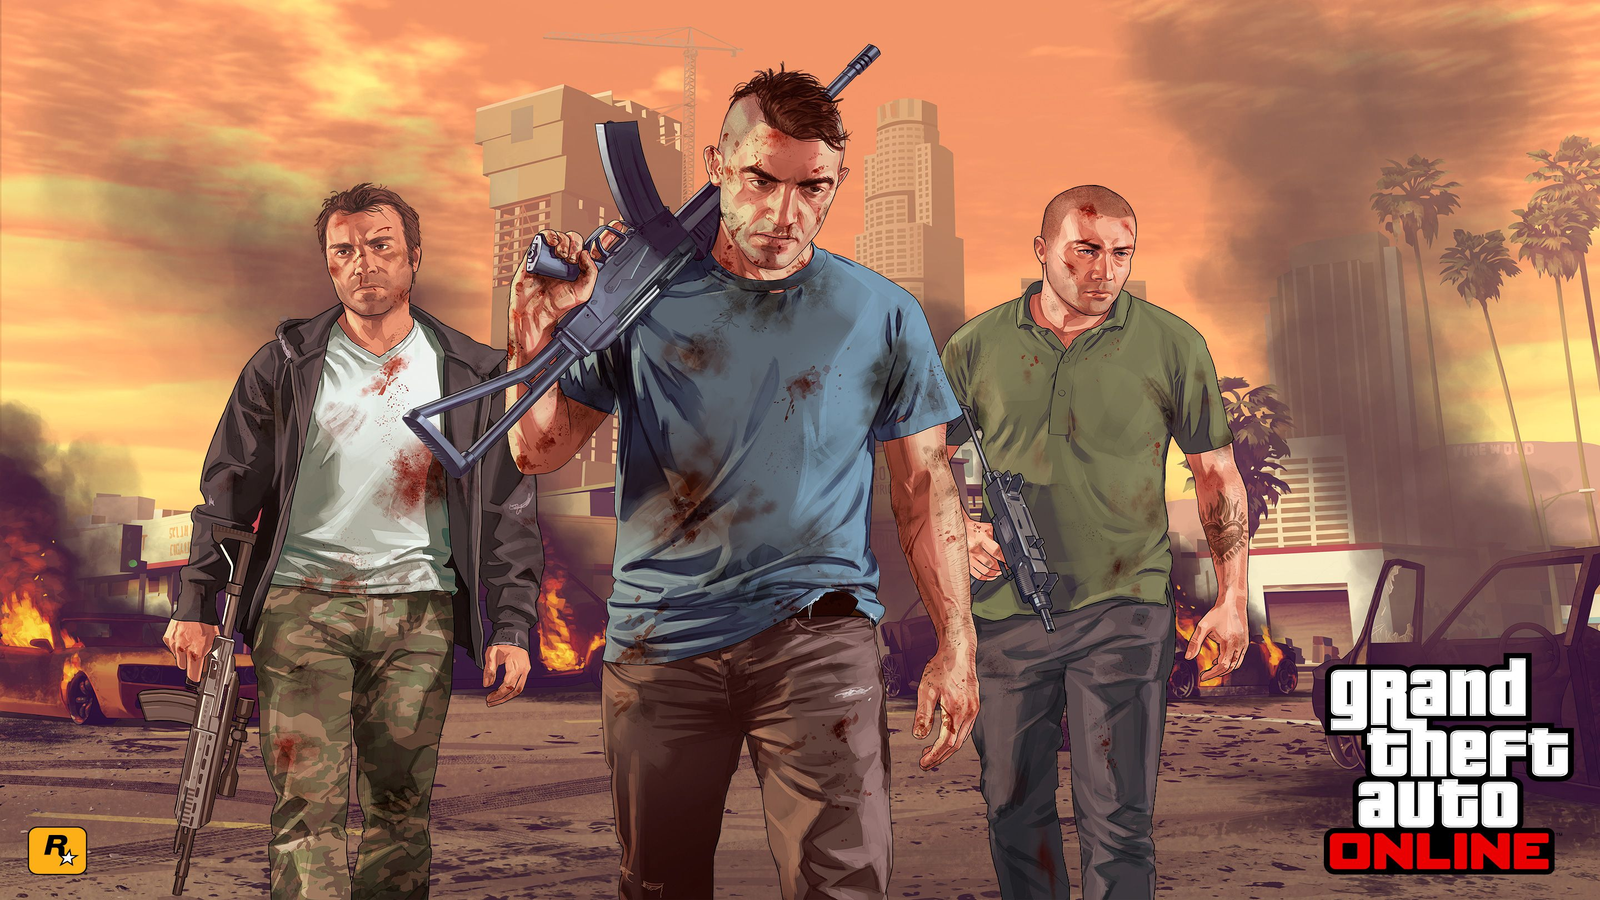 Jogo Plants Vs Zombies: Garden Warfare 2 - Xbox One - RT NO GAME